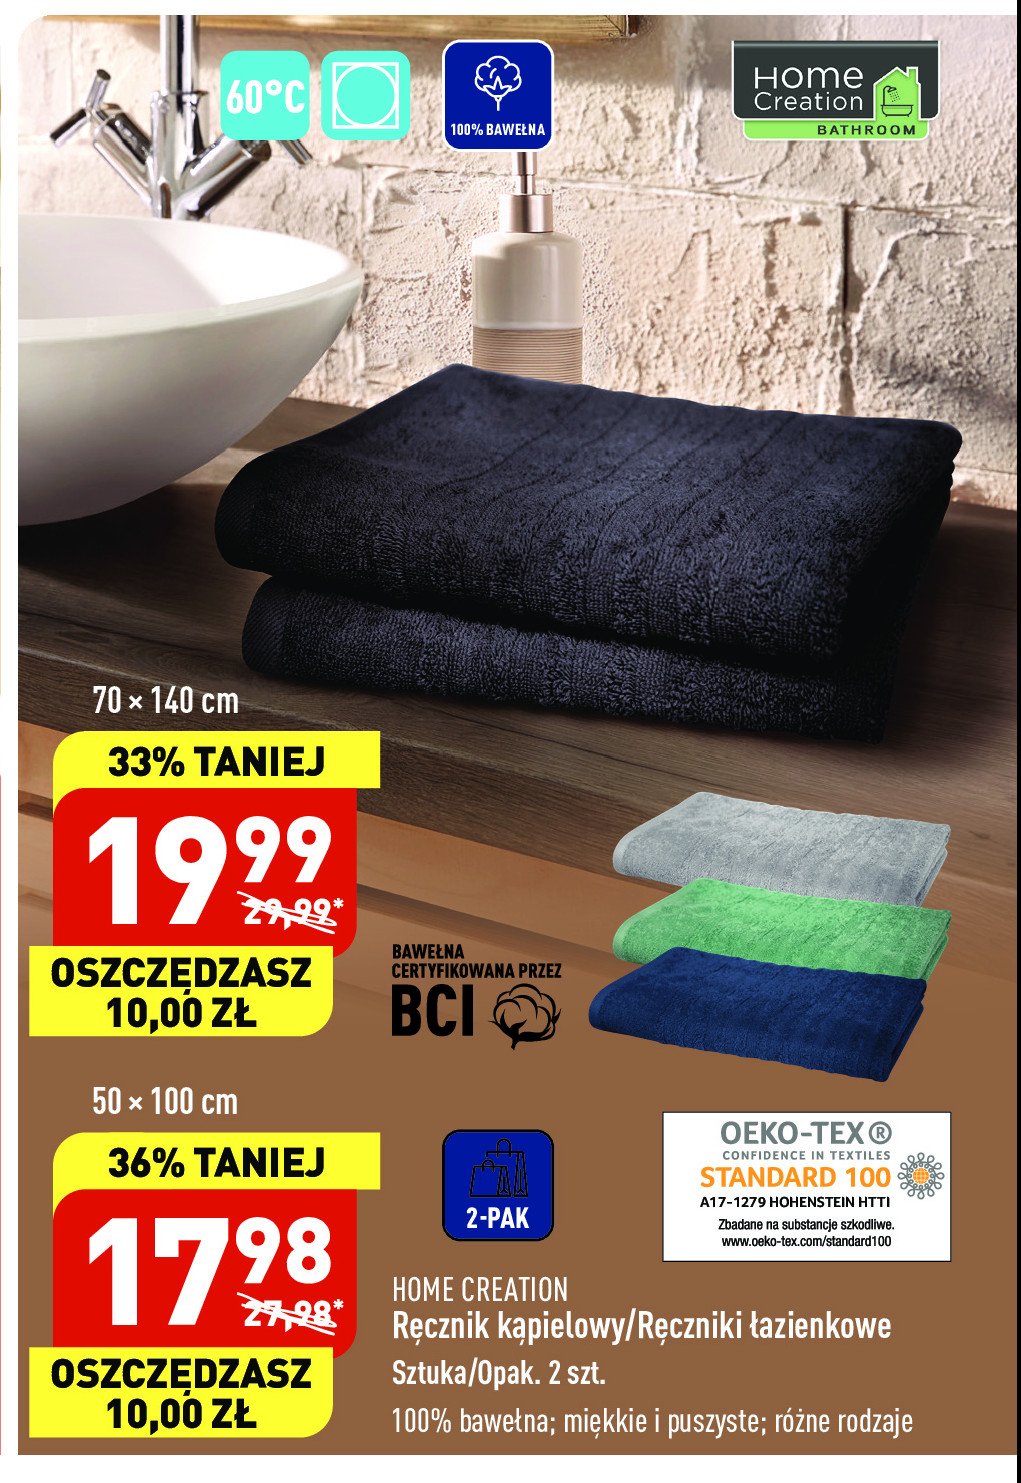 Ręcznik frotte 70 x 140 cm Home creation promocja